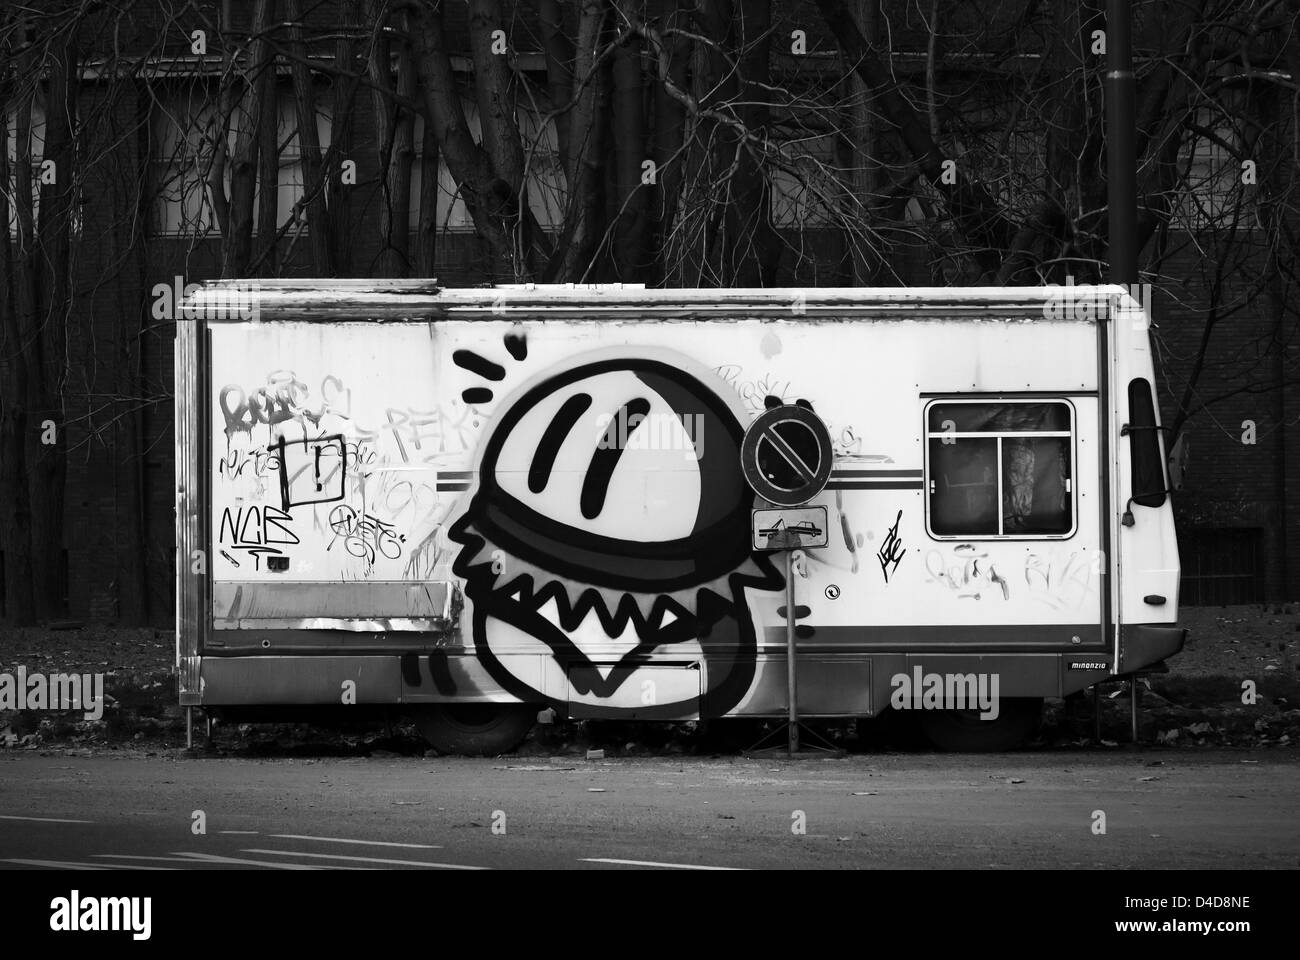 Writing. Street art. Abandoned sandwiches vendor car Stock Photo